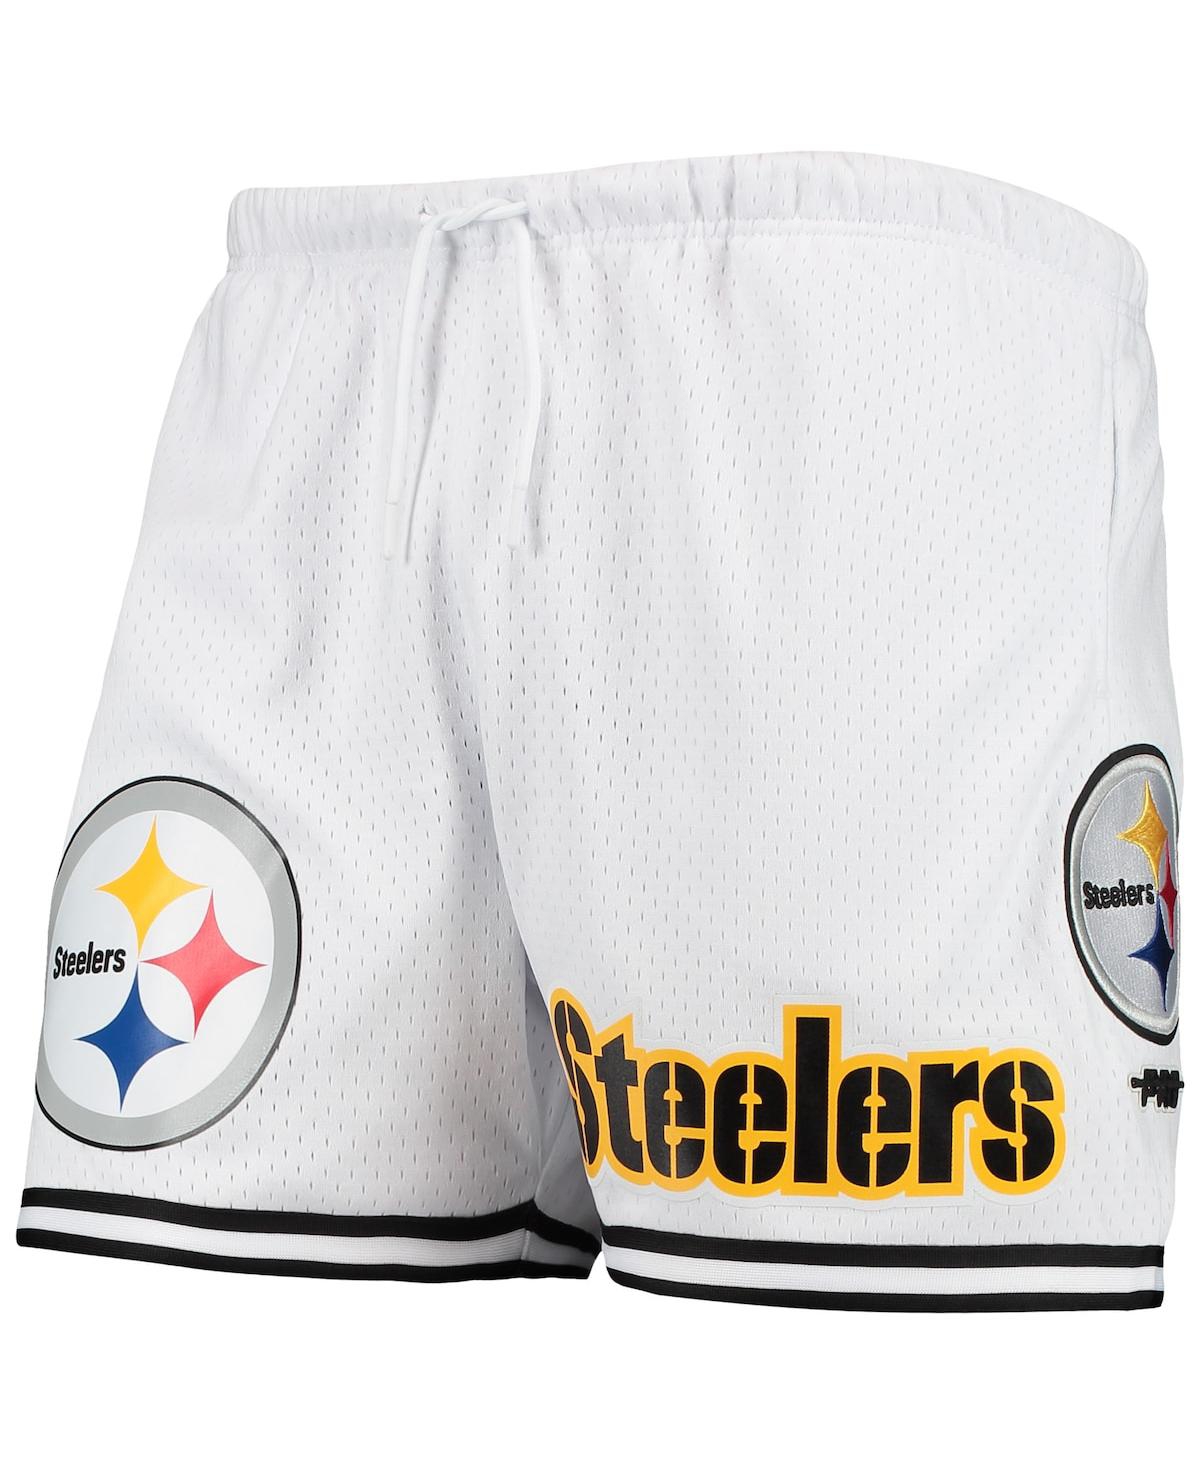 Shop Pro Standard Men's  White, Black Pittsburgh Steelers Mesh Shorts In White,black